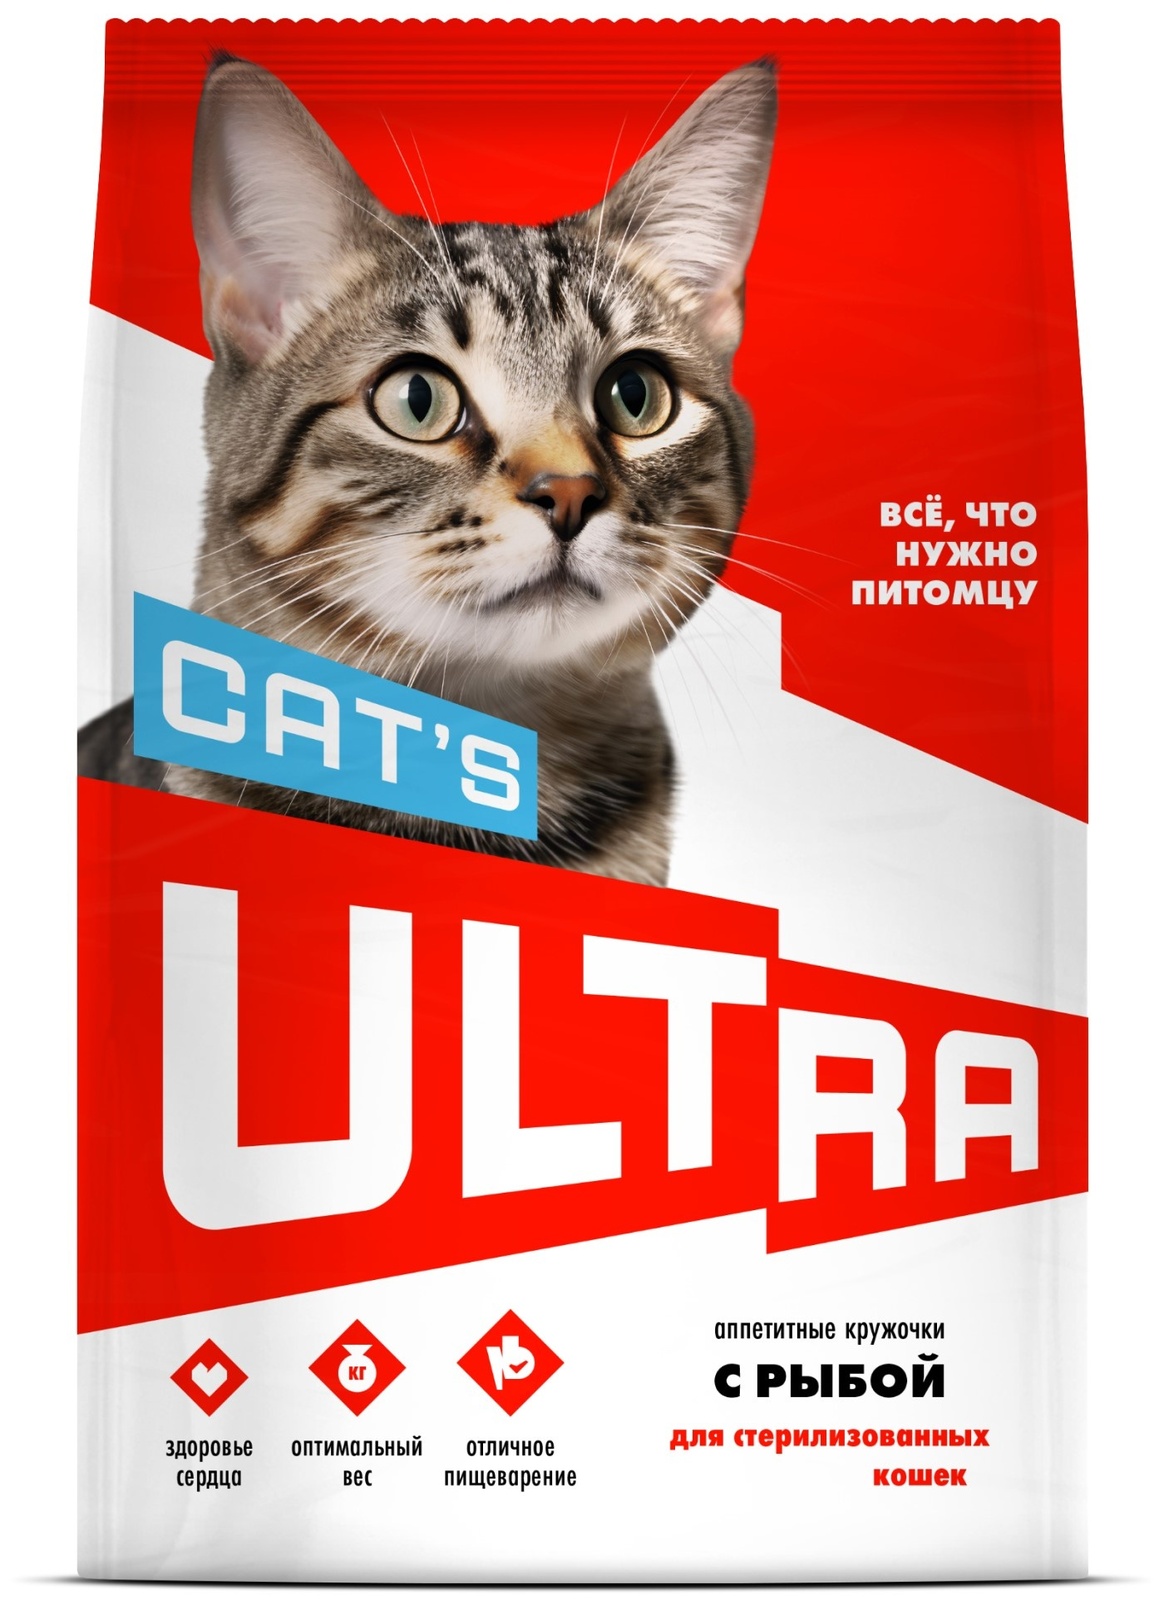 ULTRA аппетитные кружочки с рыбой для стерилизованных кошек (3 кг) ULTRA аппетитные кружочки с рыбой для стерилизованных кошек (3 кг) - фото 1